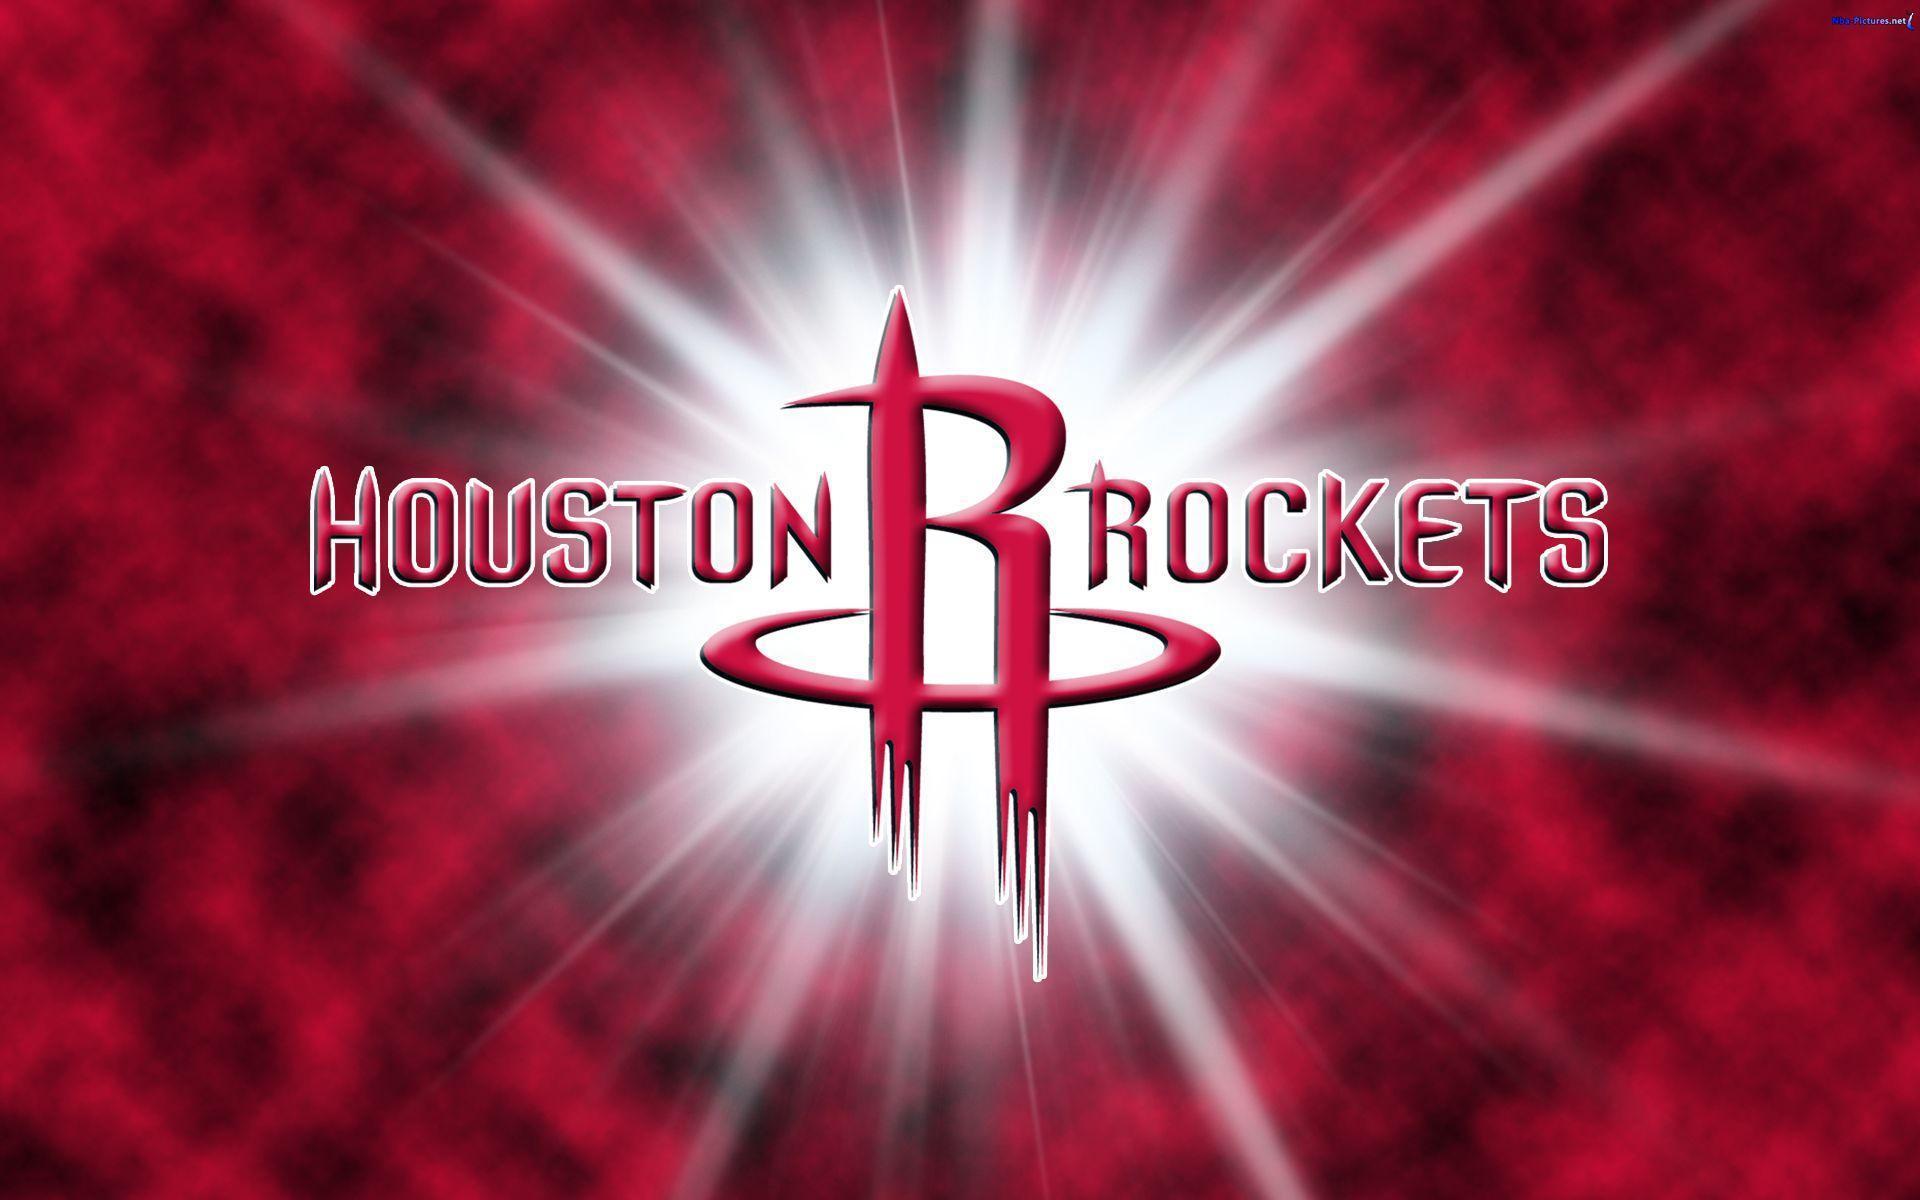 Houston Rockets 20142015 team wallpaper by Kevintmac on DeviantArt